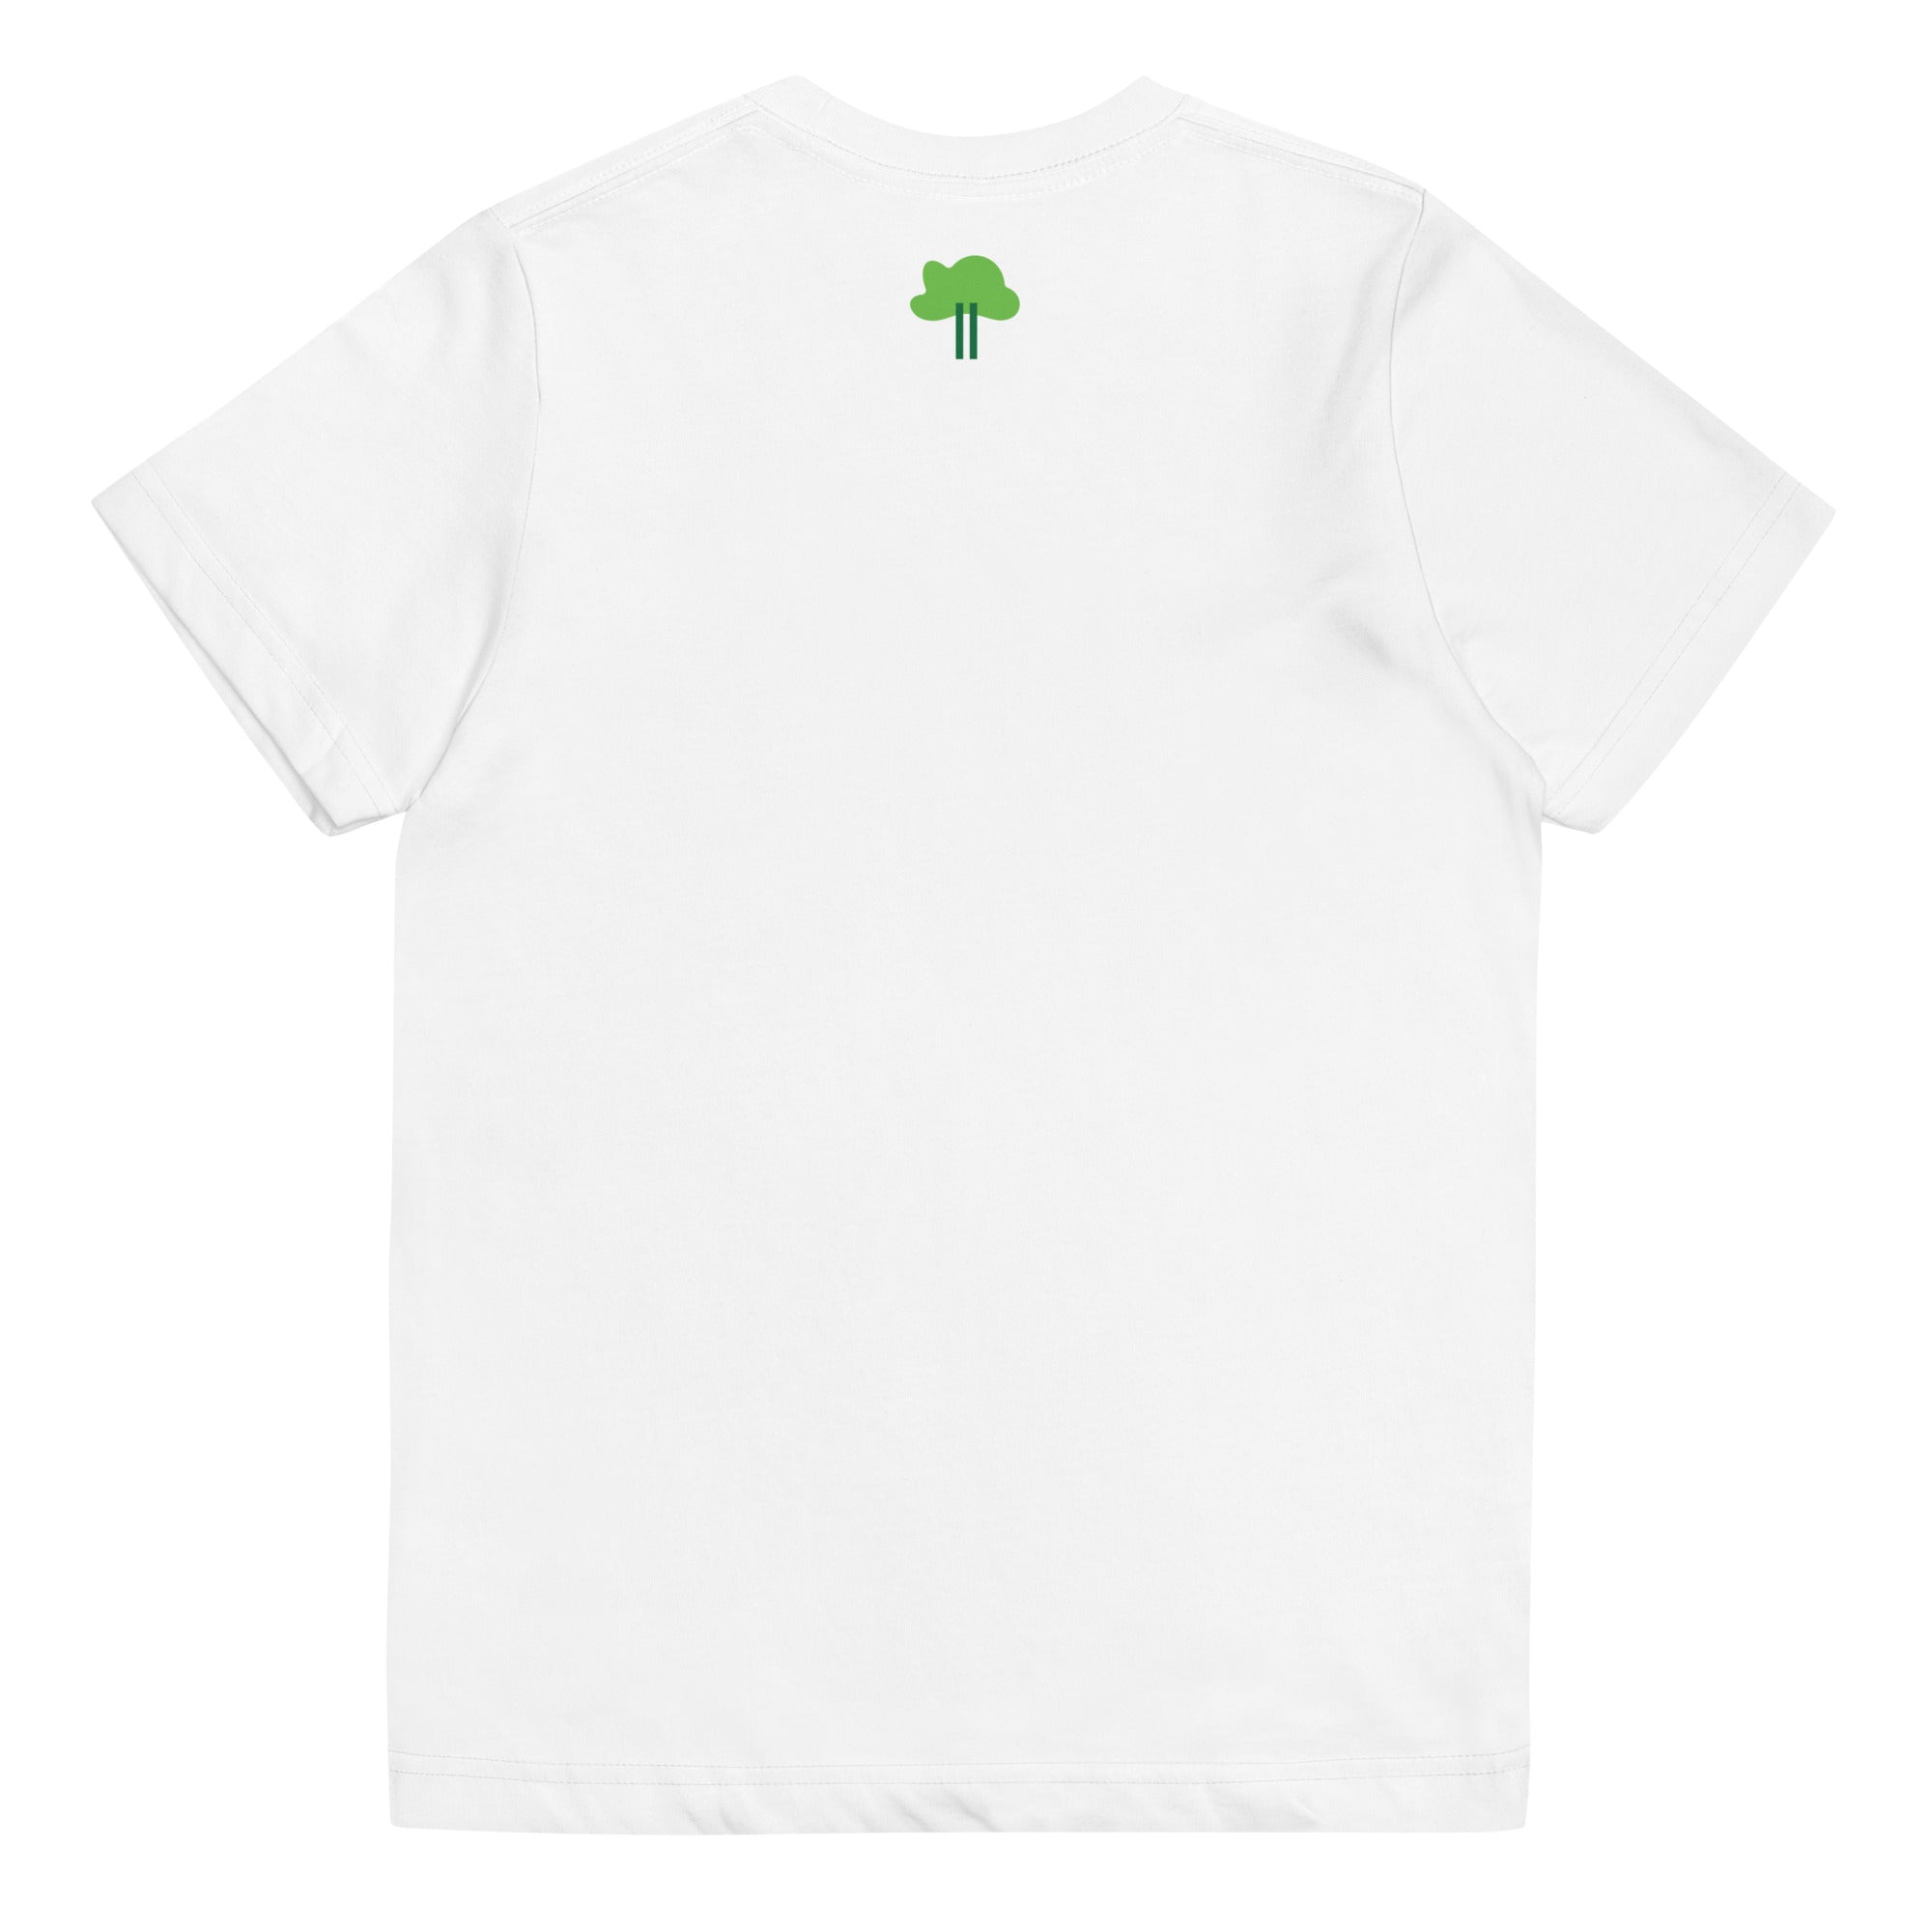 II Temp - Sabana - K9 | Youth jersey t-shirt